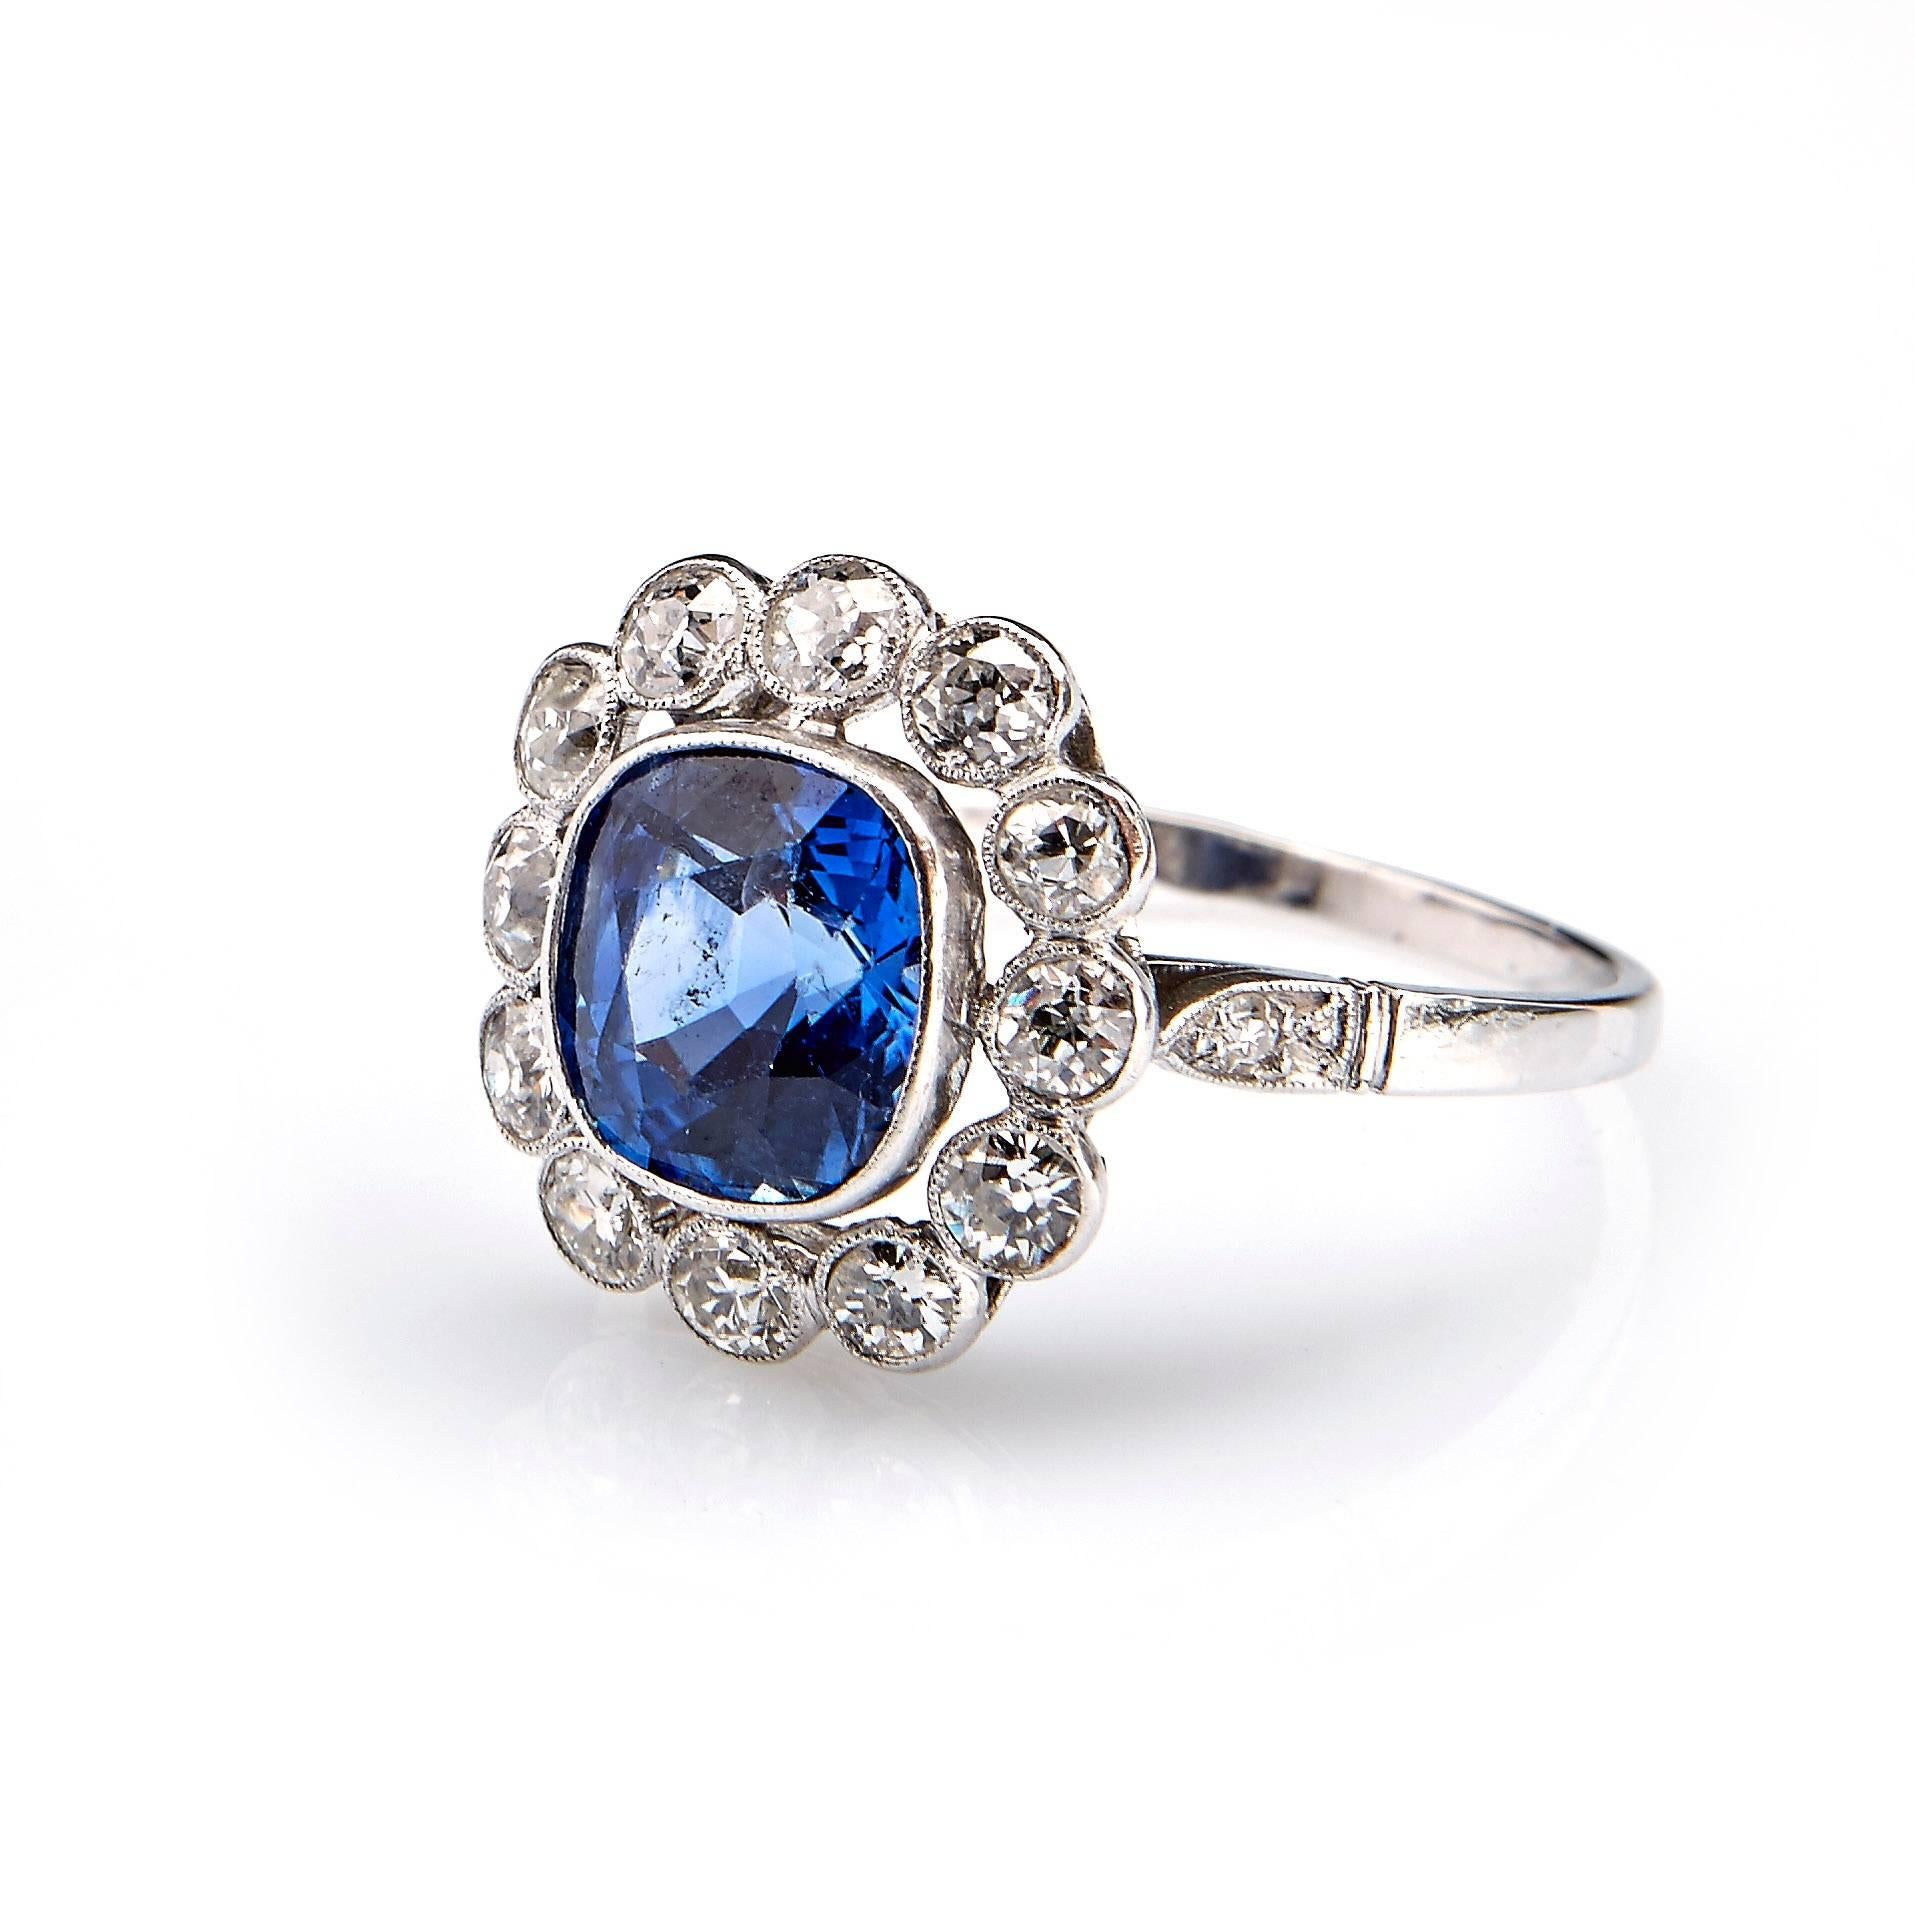 Art Deco Platinum Ring,Unheated Ceylan Saphire 2.47 Carats,Diamonds Circled.
L.F.G certified (Laboratoire Français de Gemmologie)
Weight : 3.30 gr. - Ring size 54